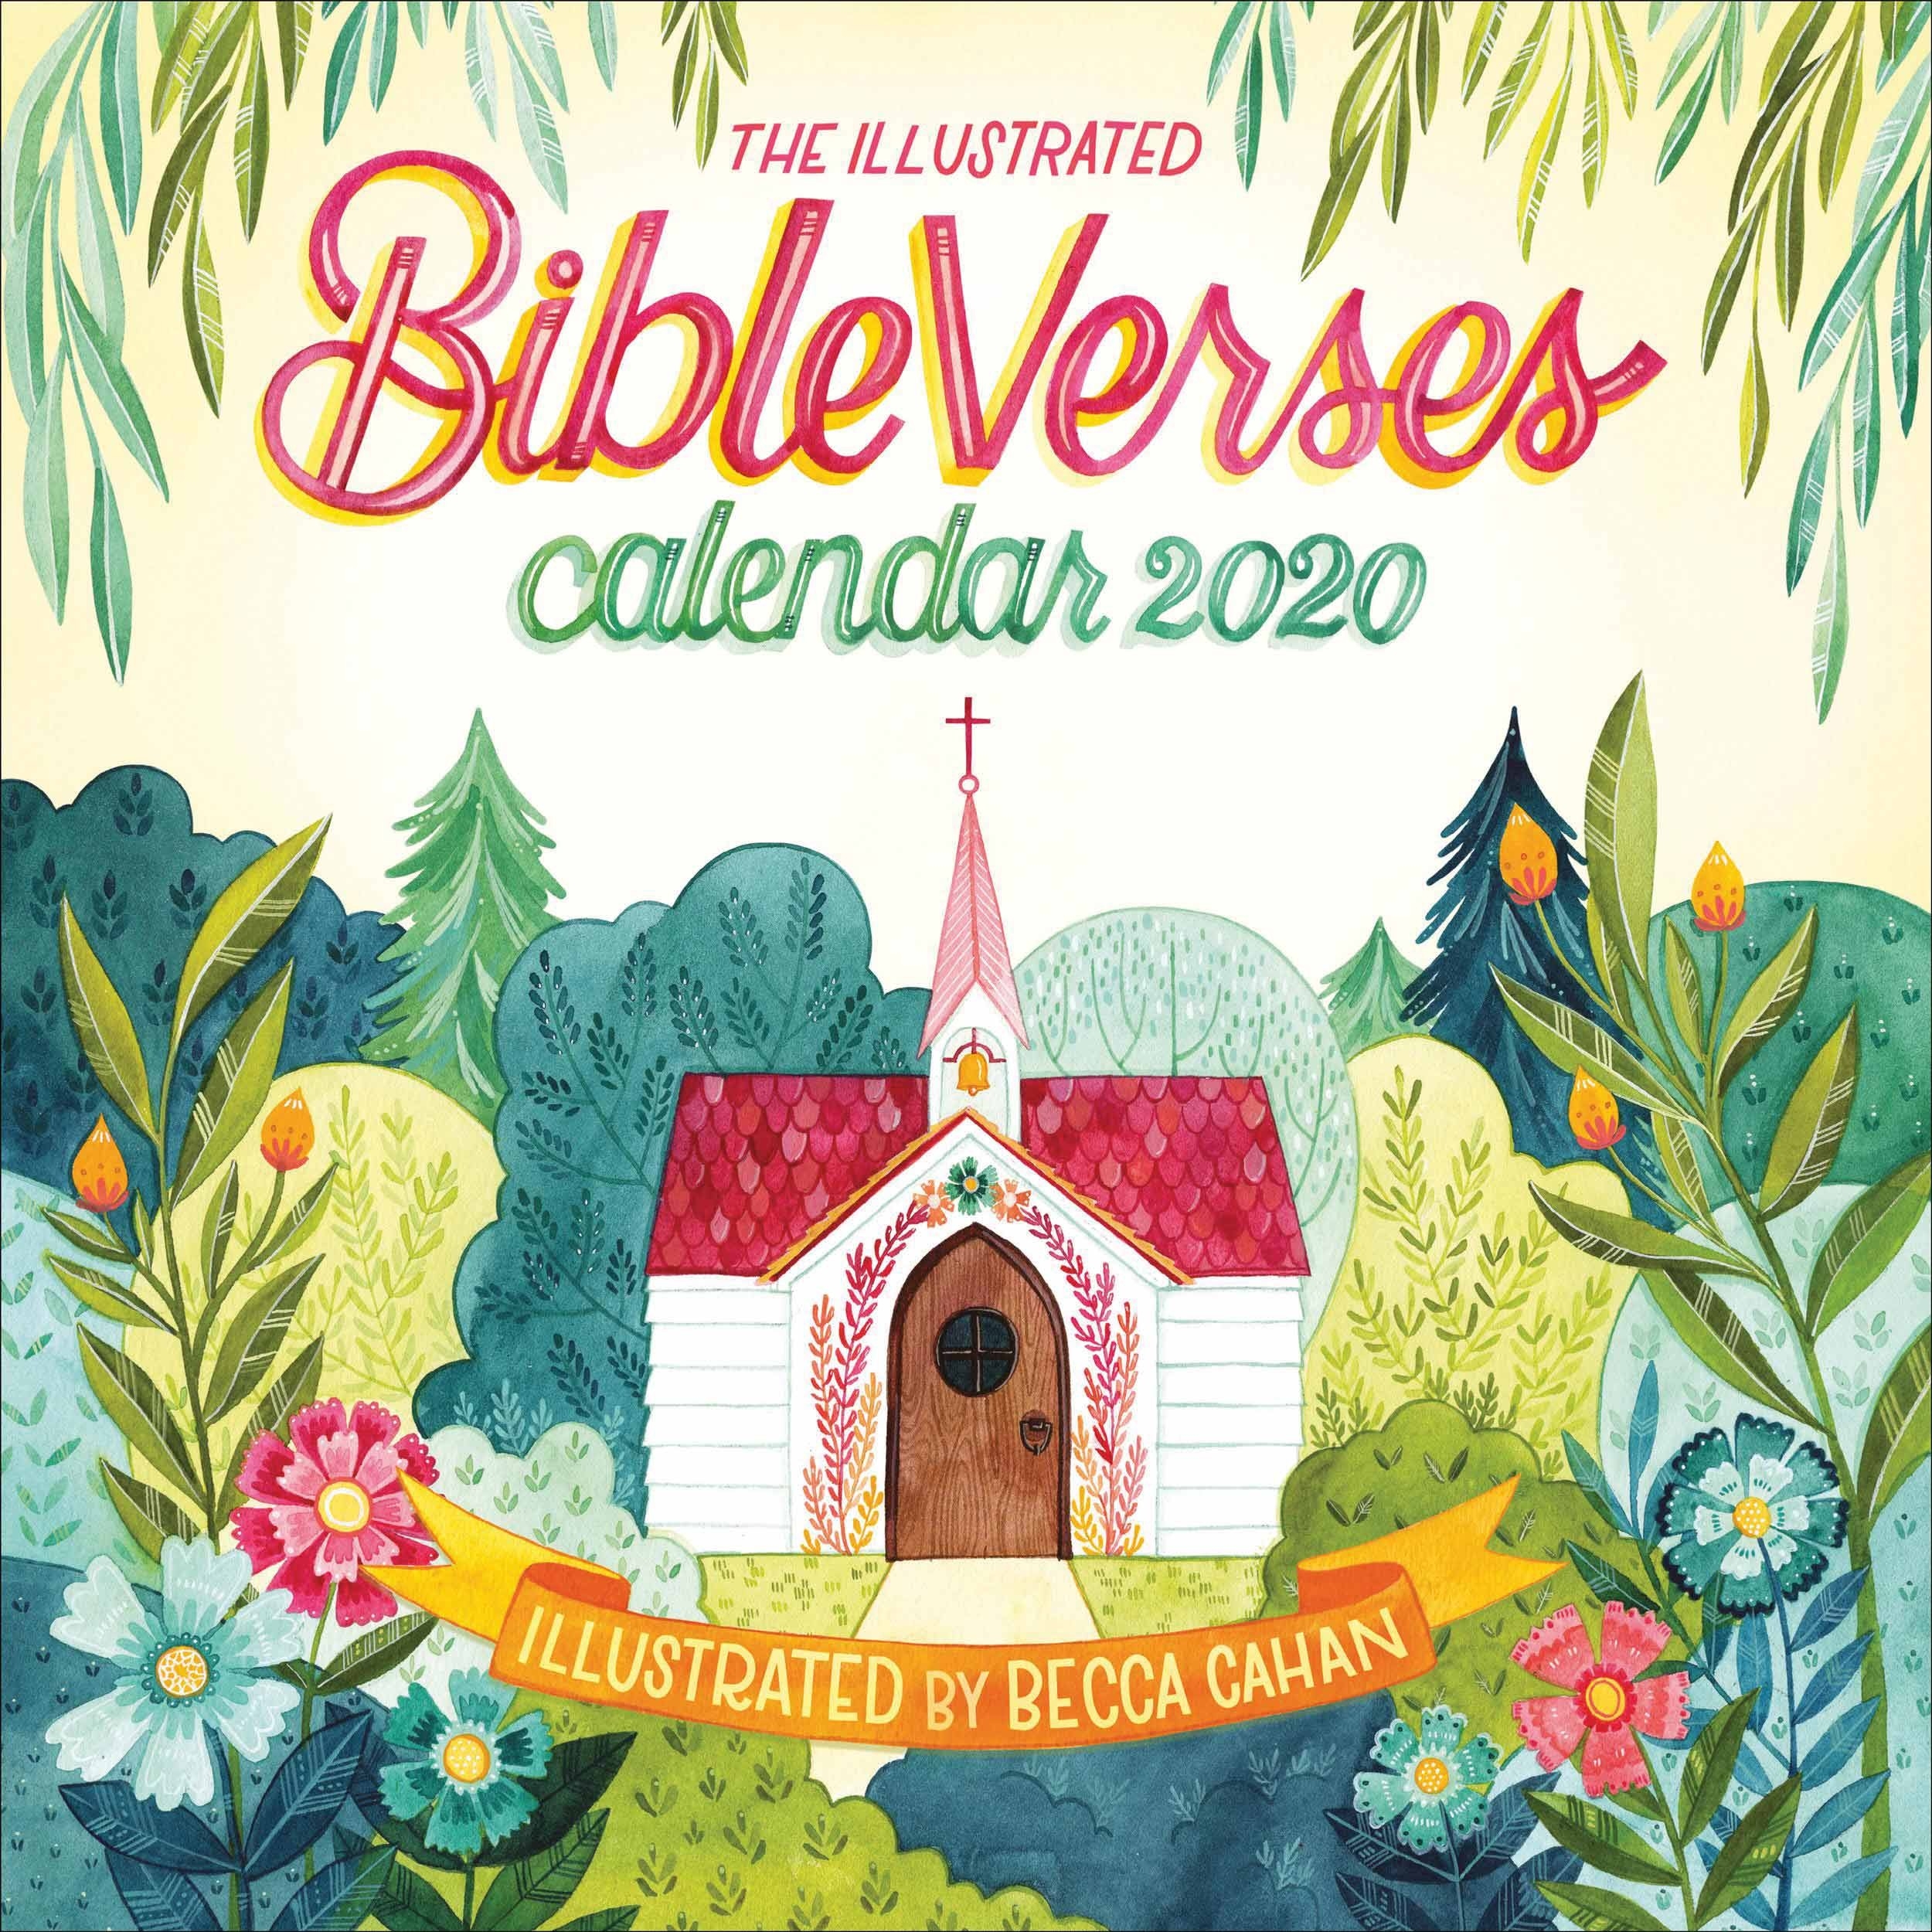 Illustrated Bible Verses Calendar 2020  Advent Scripture Readings 2020 Calendar